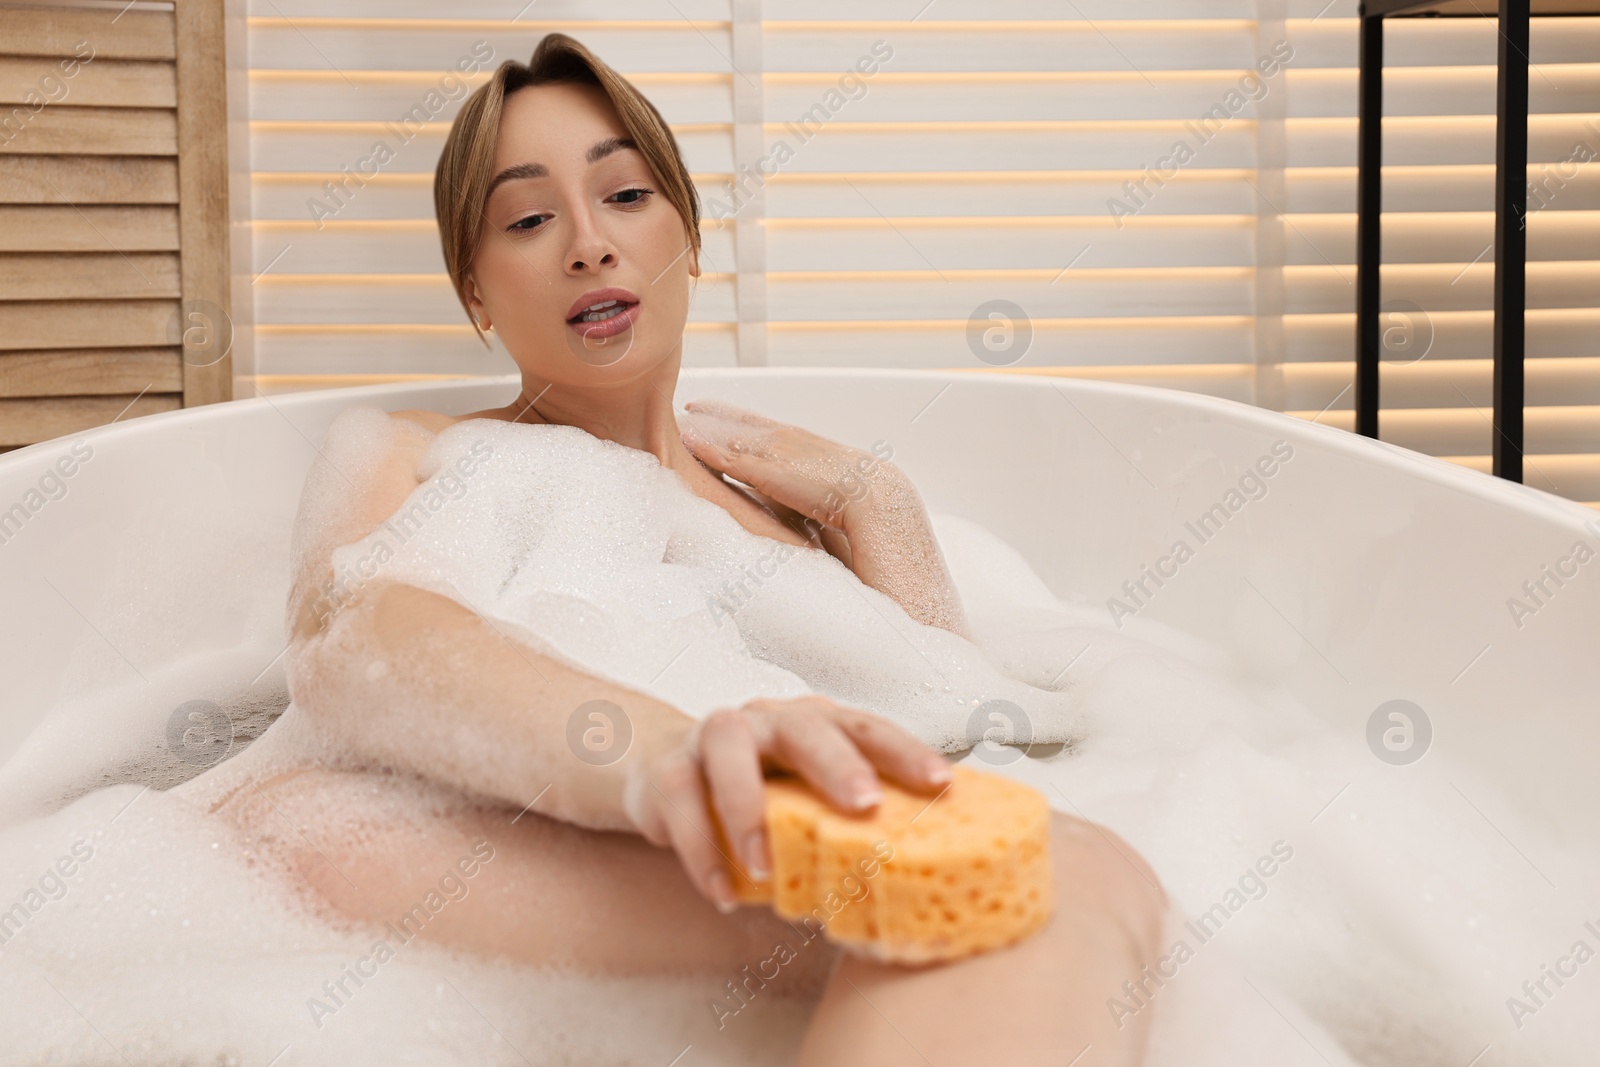 Photo of Beautiful woman taking bath with foam in tub indoors